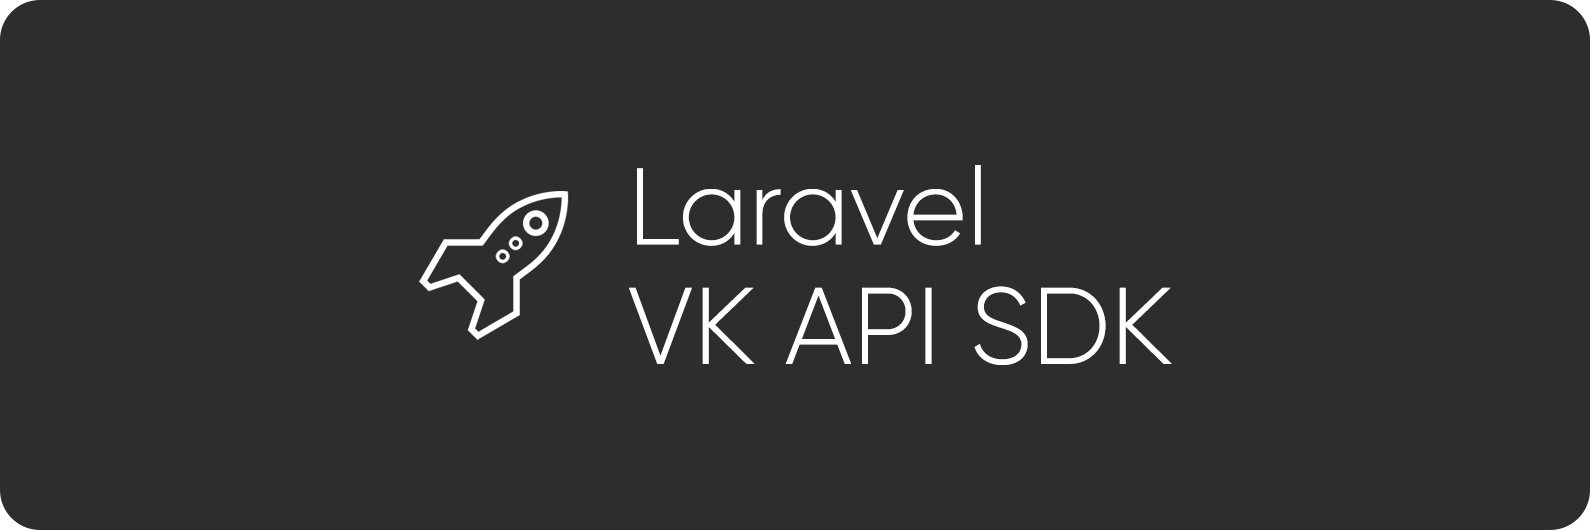 Laravel VK API SDK Logo